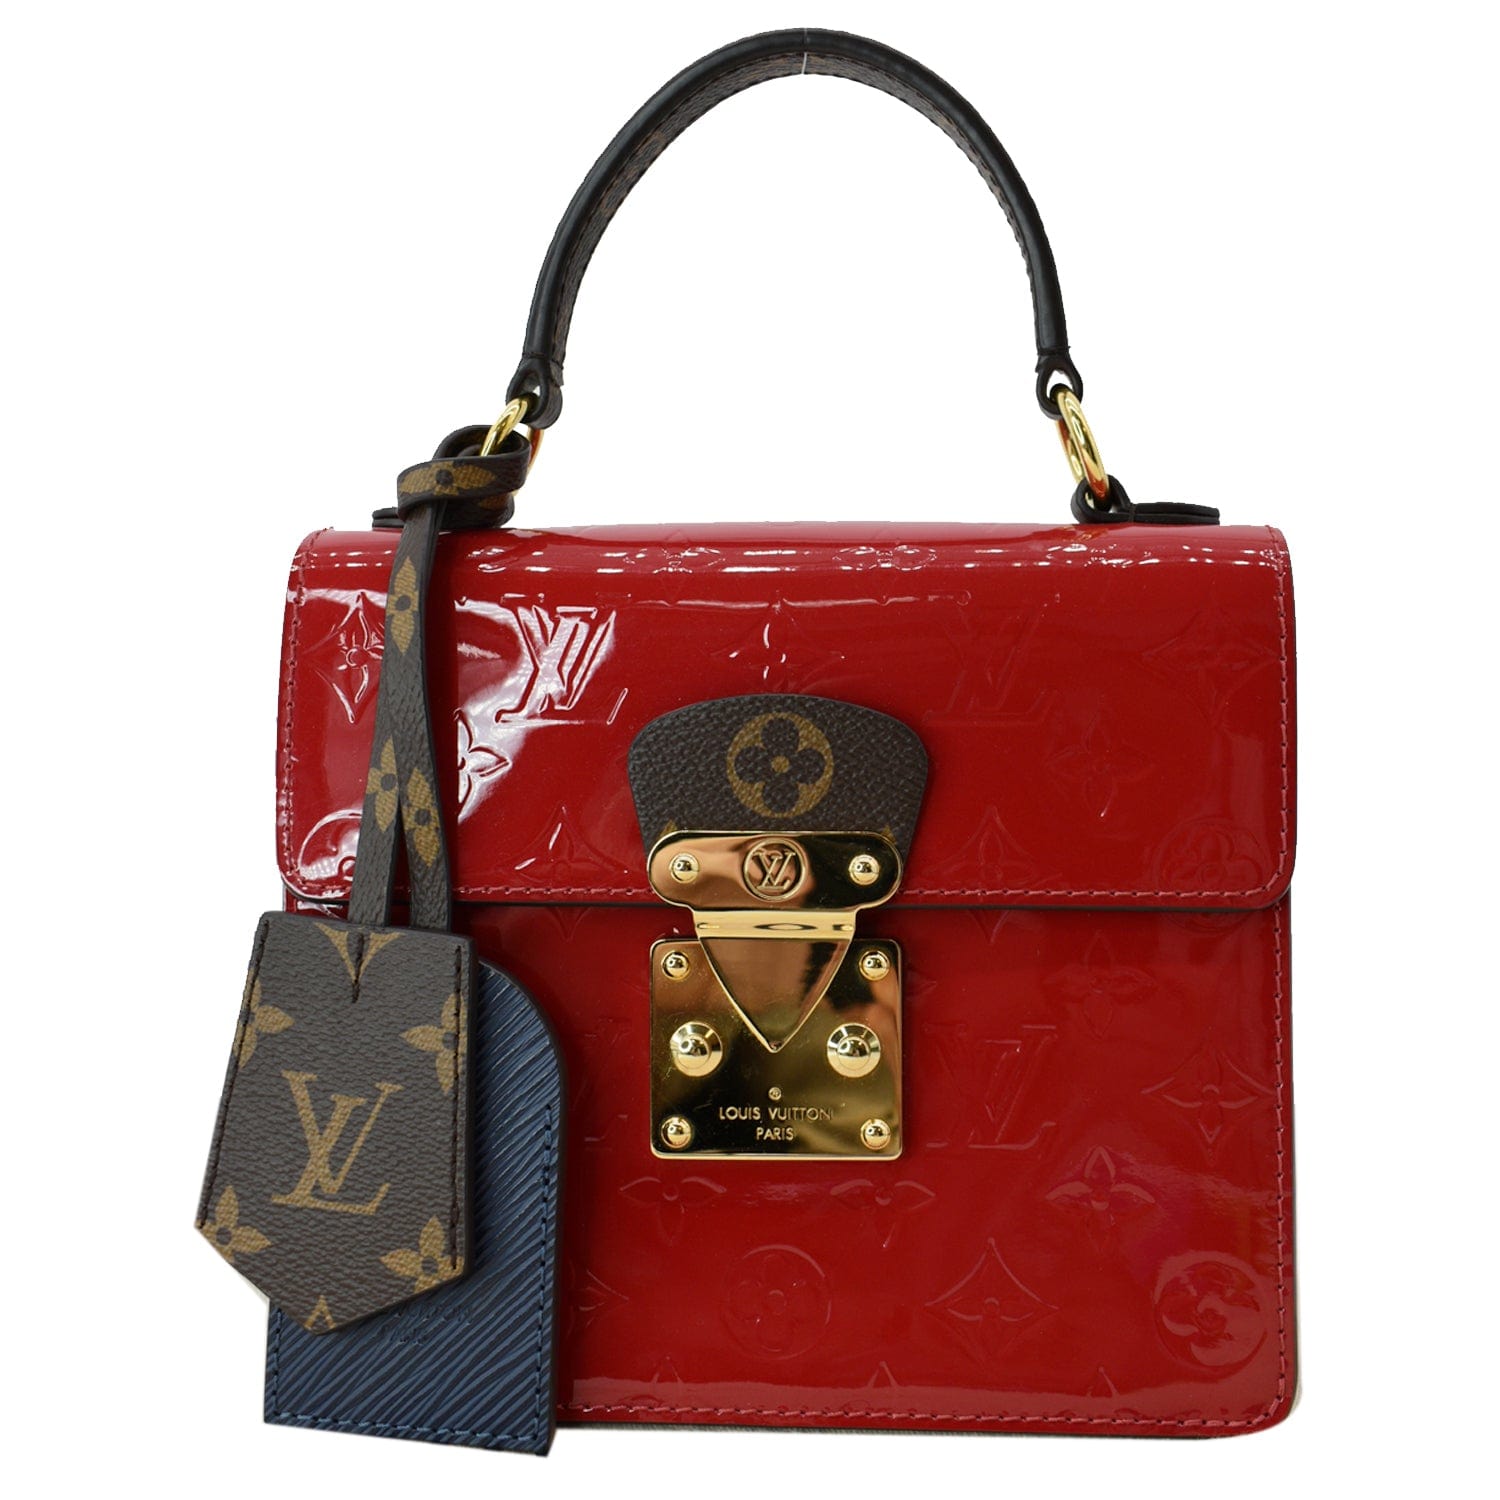 street vernis leather handbag